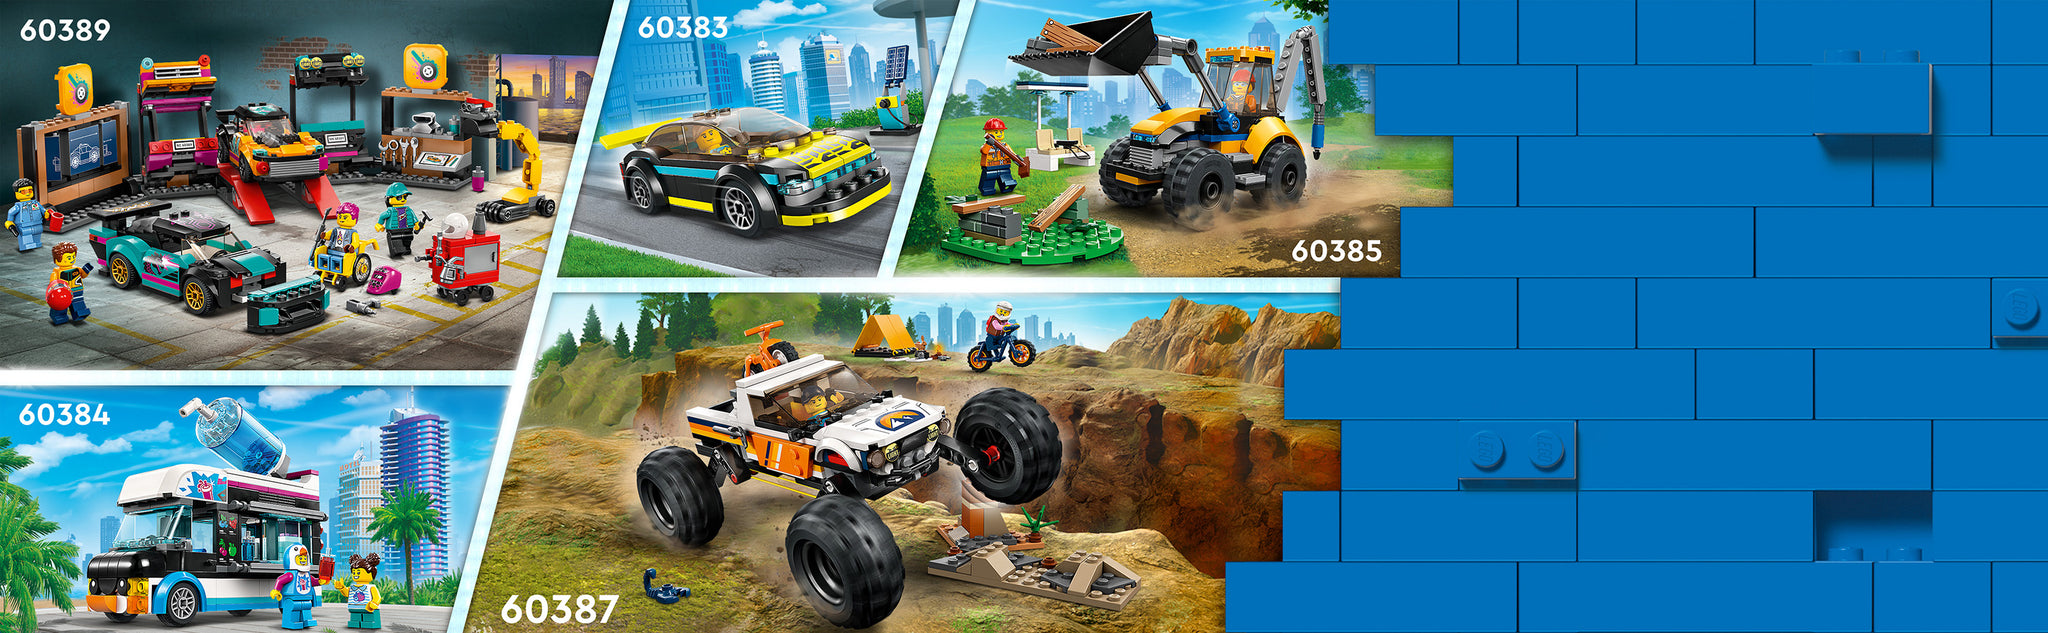 LEGO 60387 4x4 Off-Road Adventures